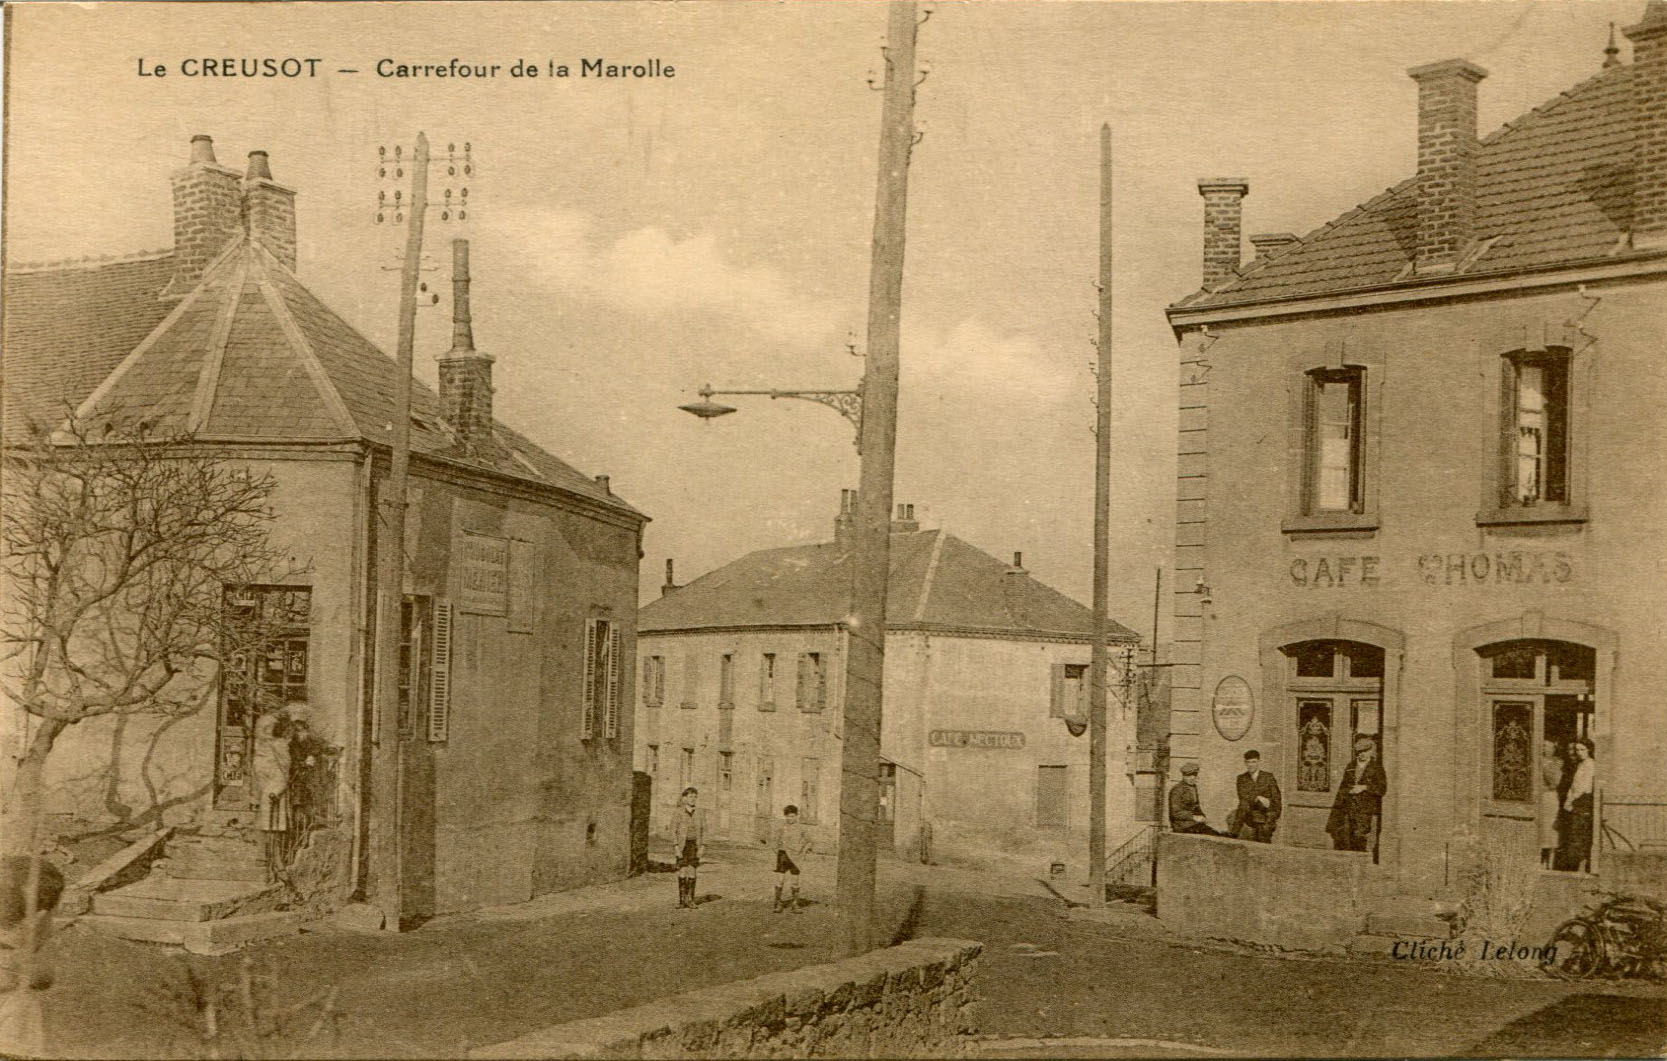 Carrefour de la Marolle